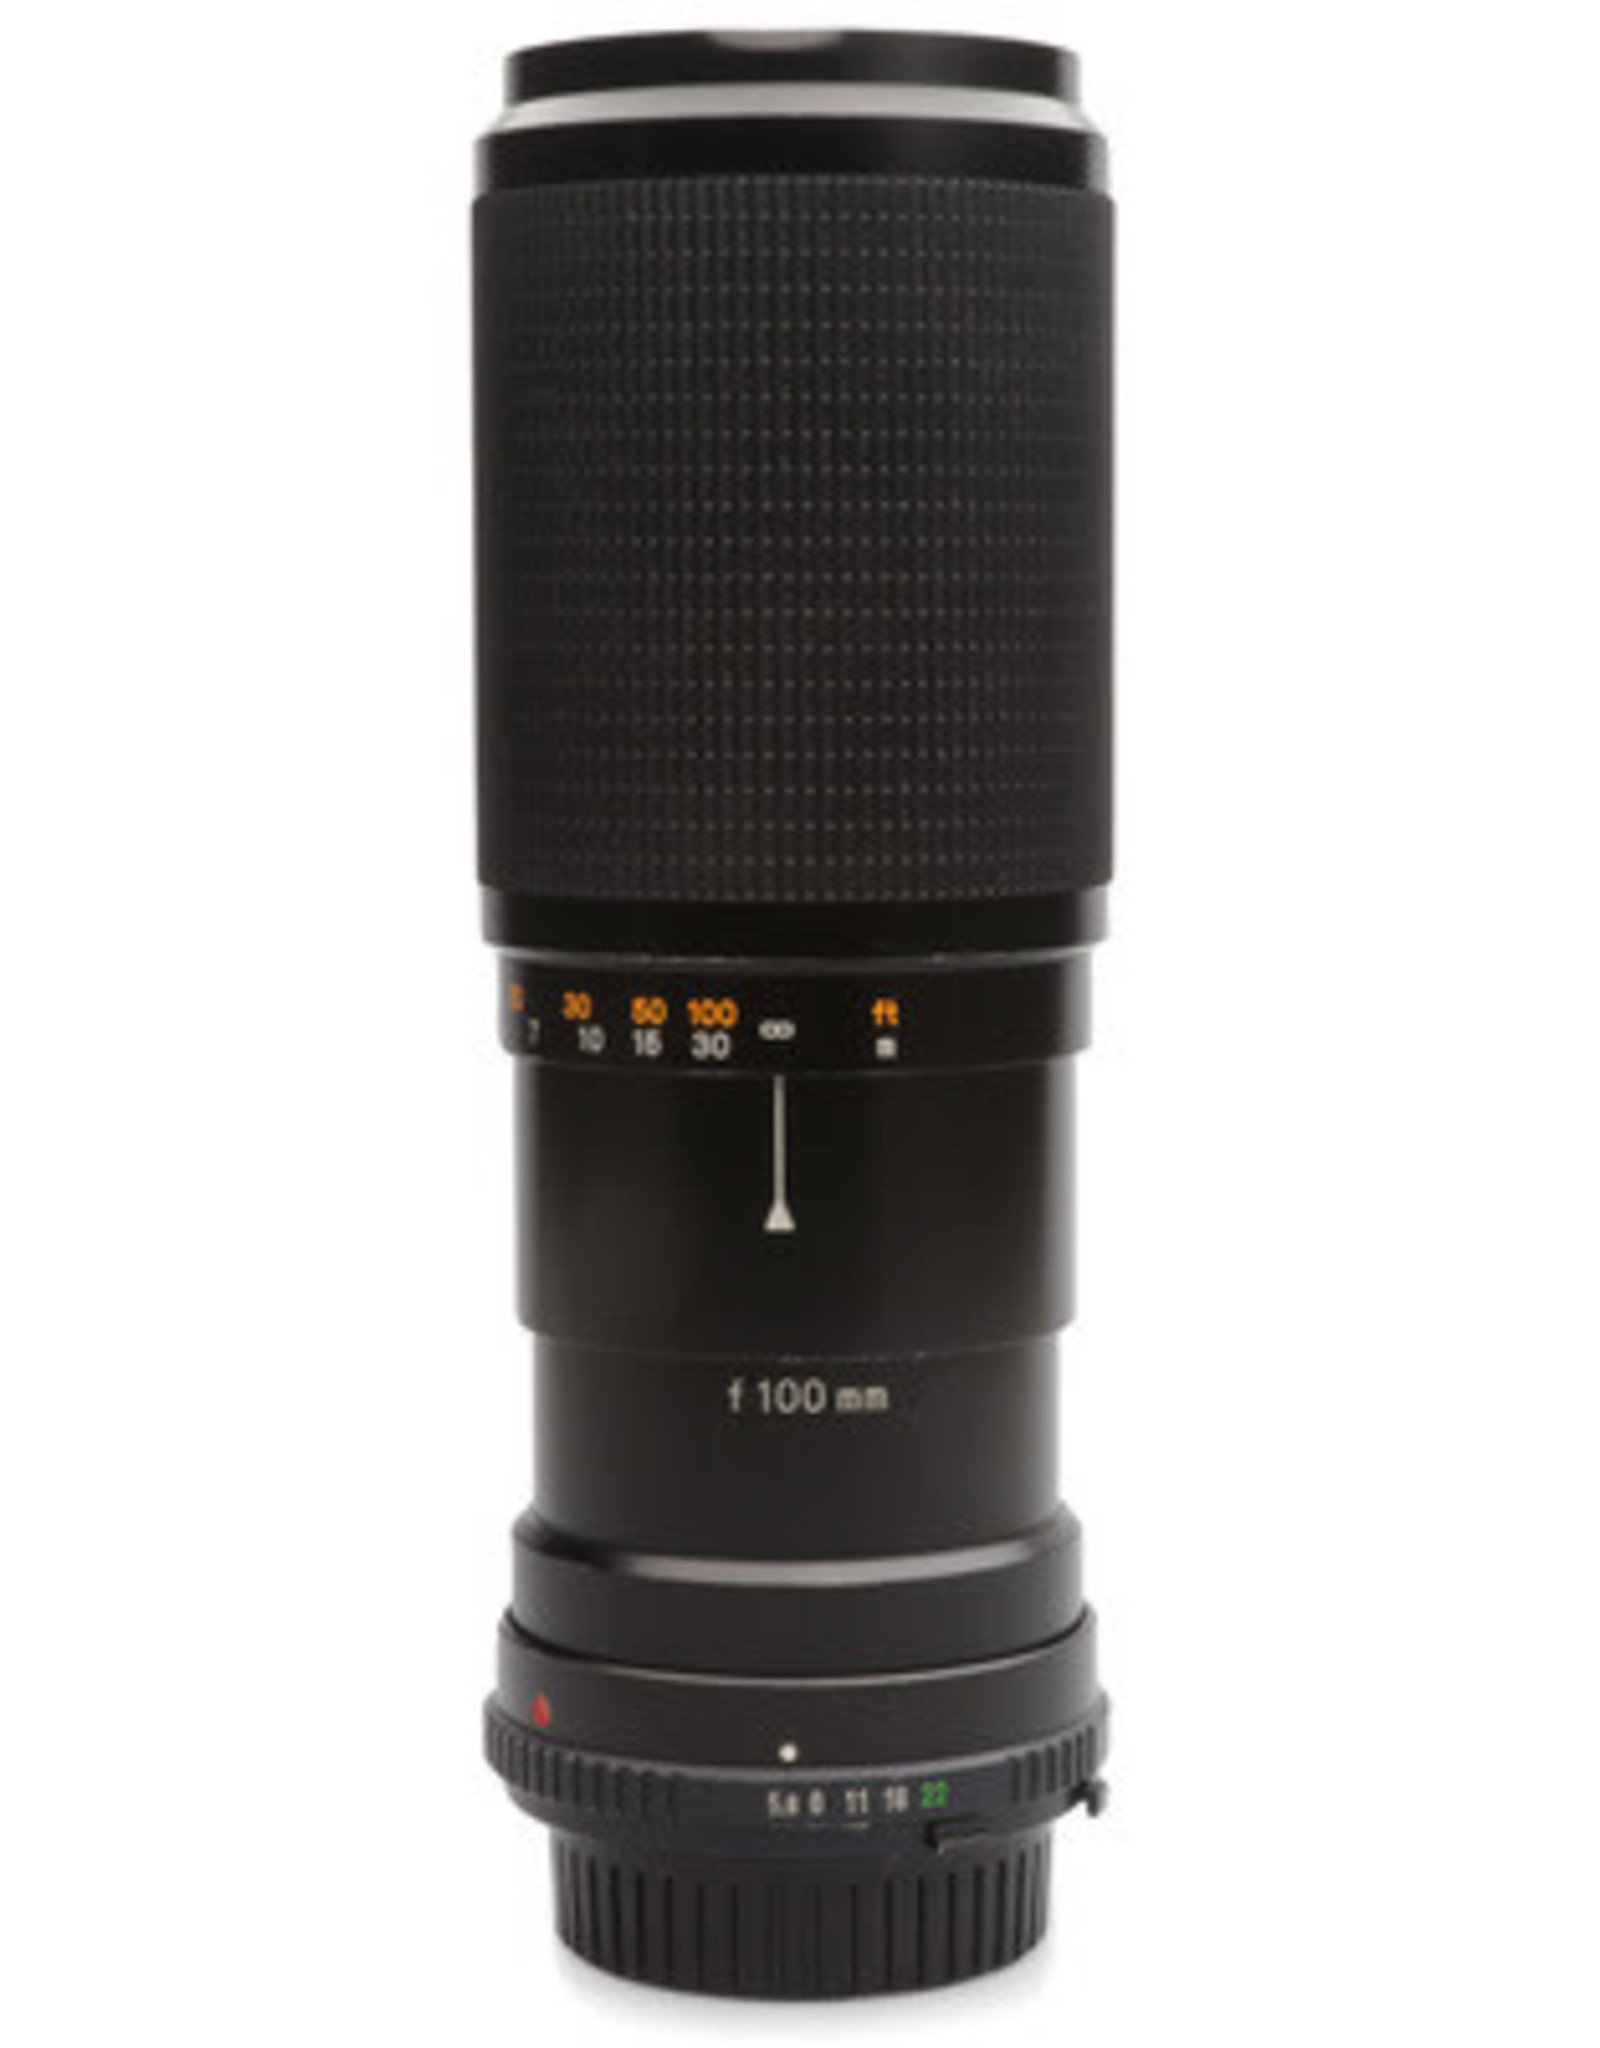 Minolta Minolta 100-200mm f/5.6 MD Rokkor-X Zoom Lens